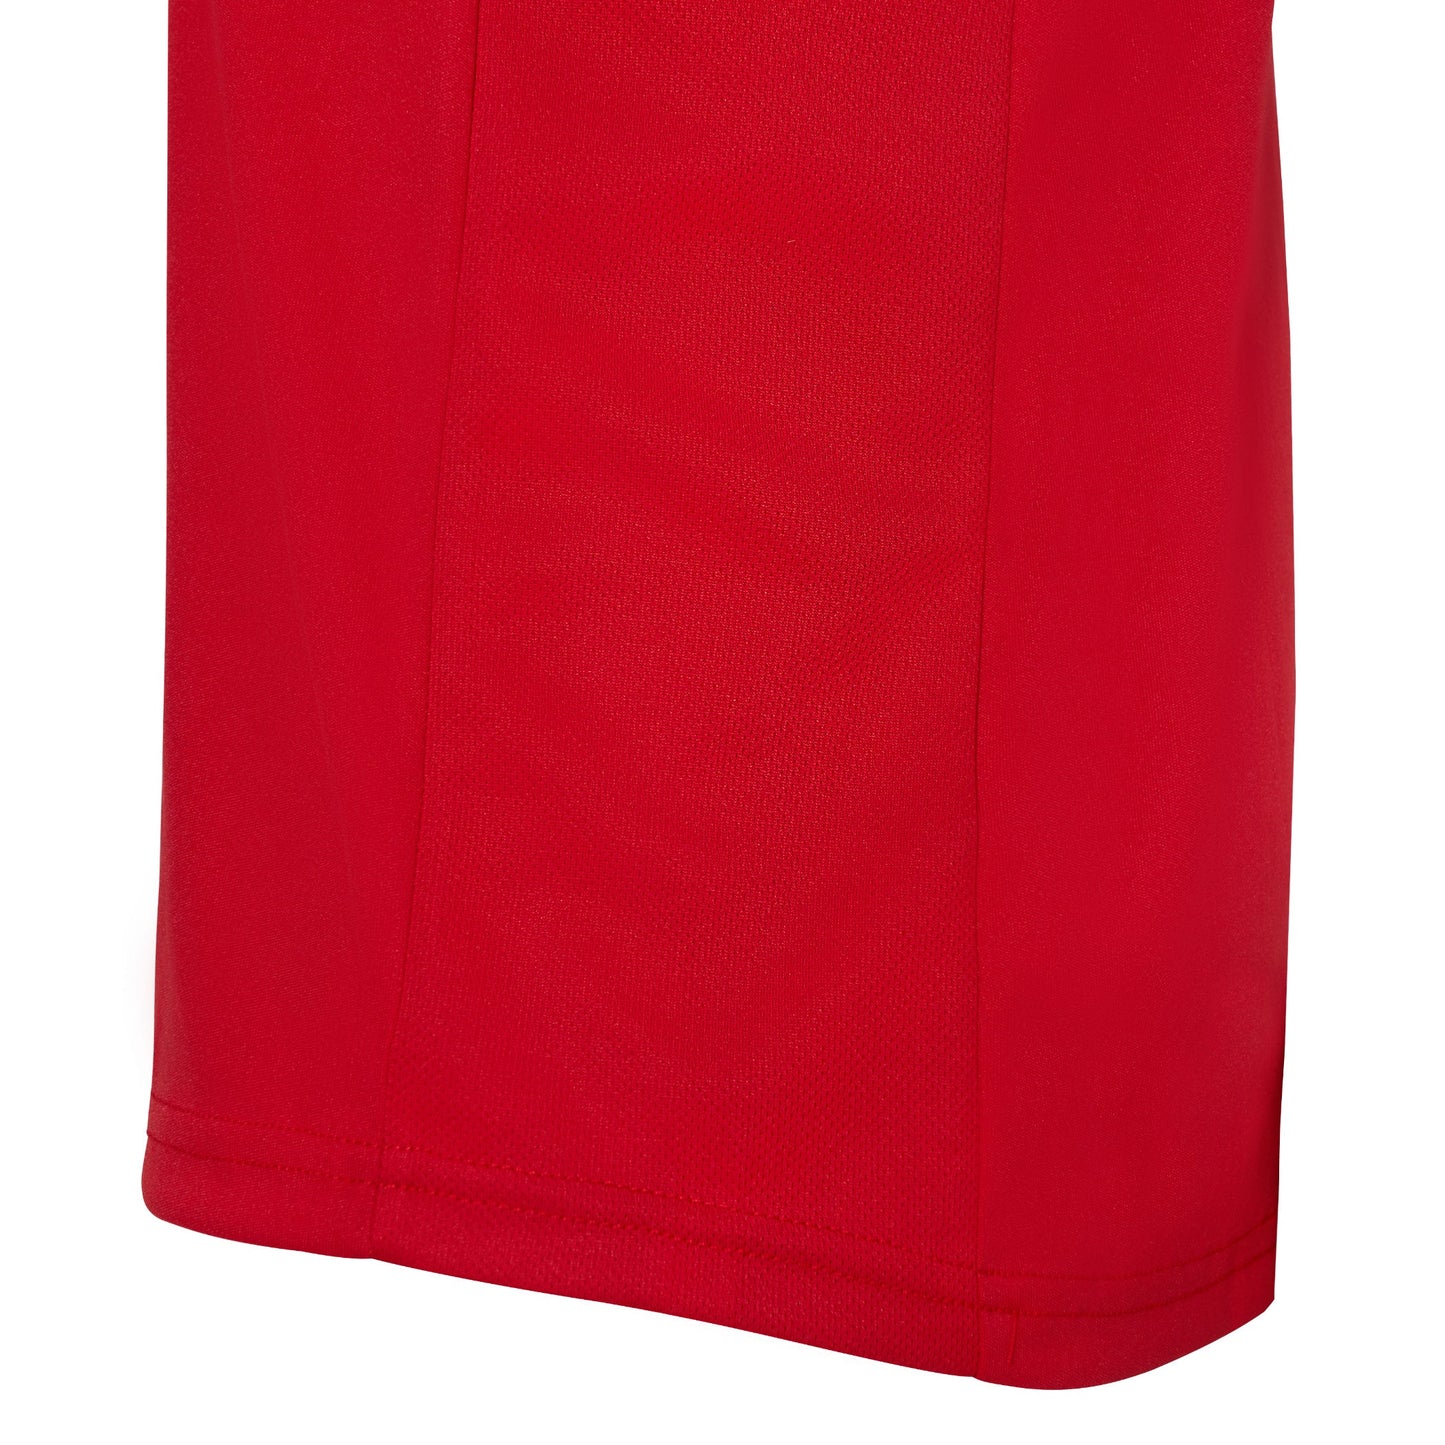 Ashford HC - Short Sleeve Training Top Women's Red